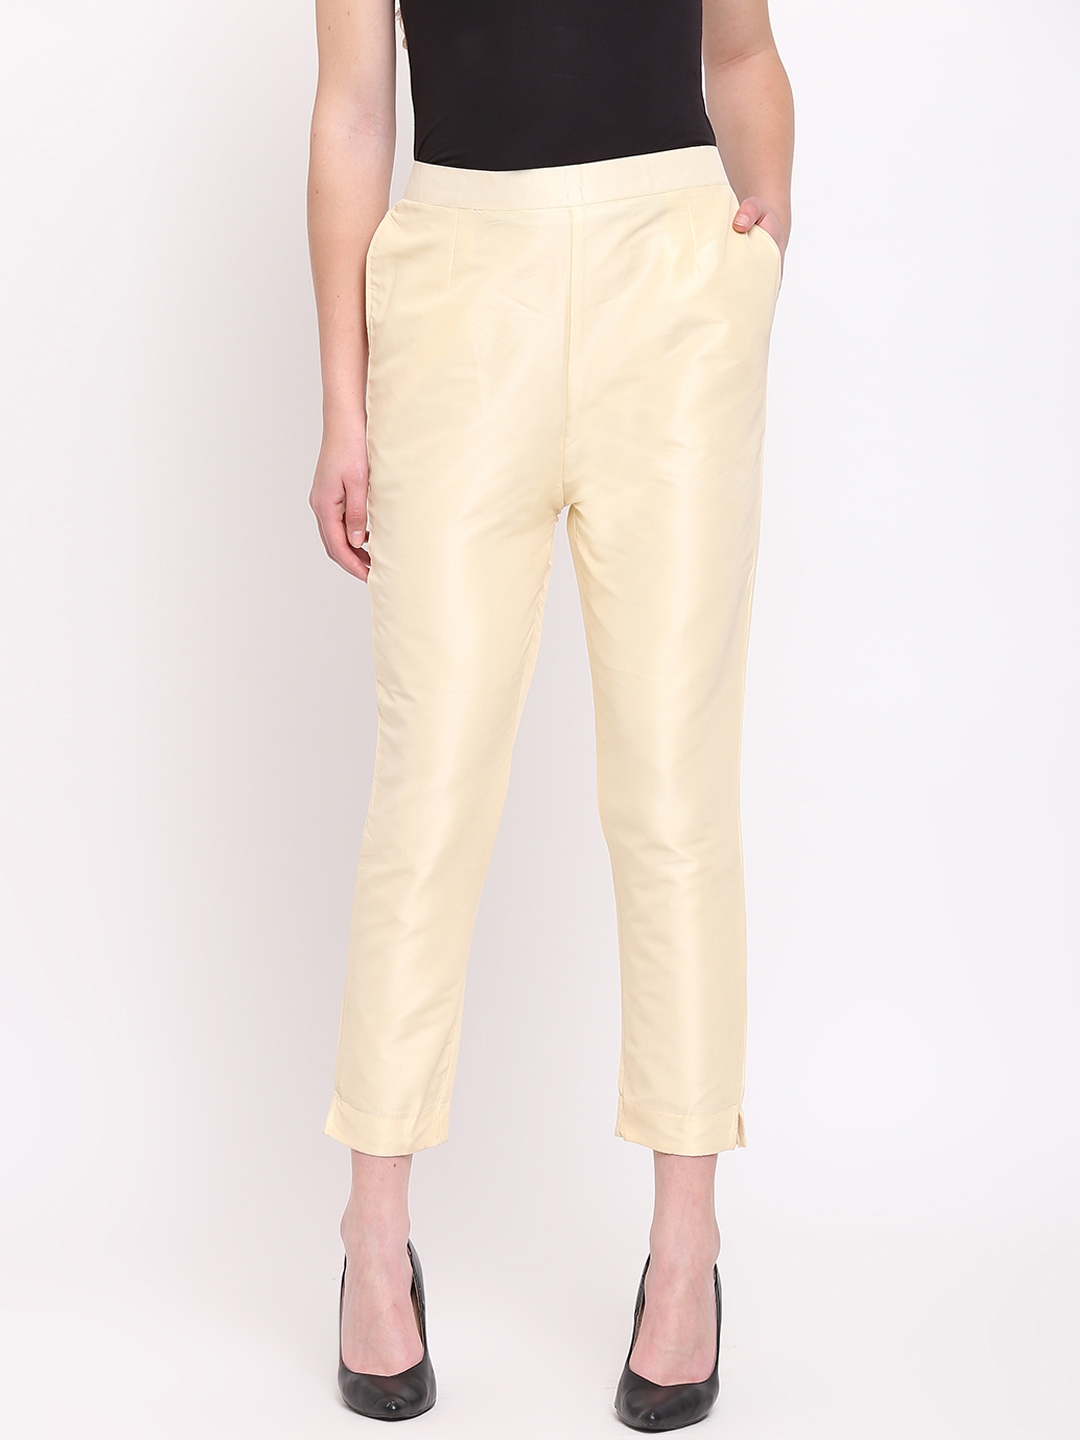 Buy KATLINE for Women Regular Fit Cream Beige Colored Cotton Lycra Blend Cigarette  Trousers Pack of 2 Combo Set at Amazonin